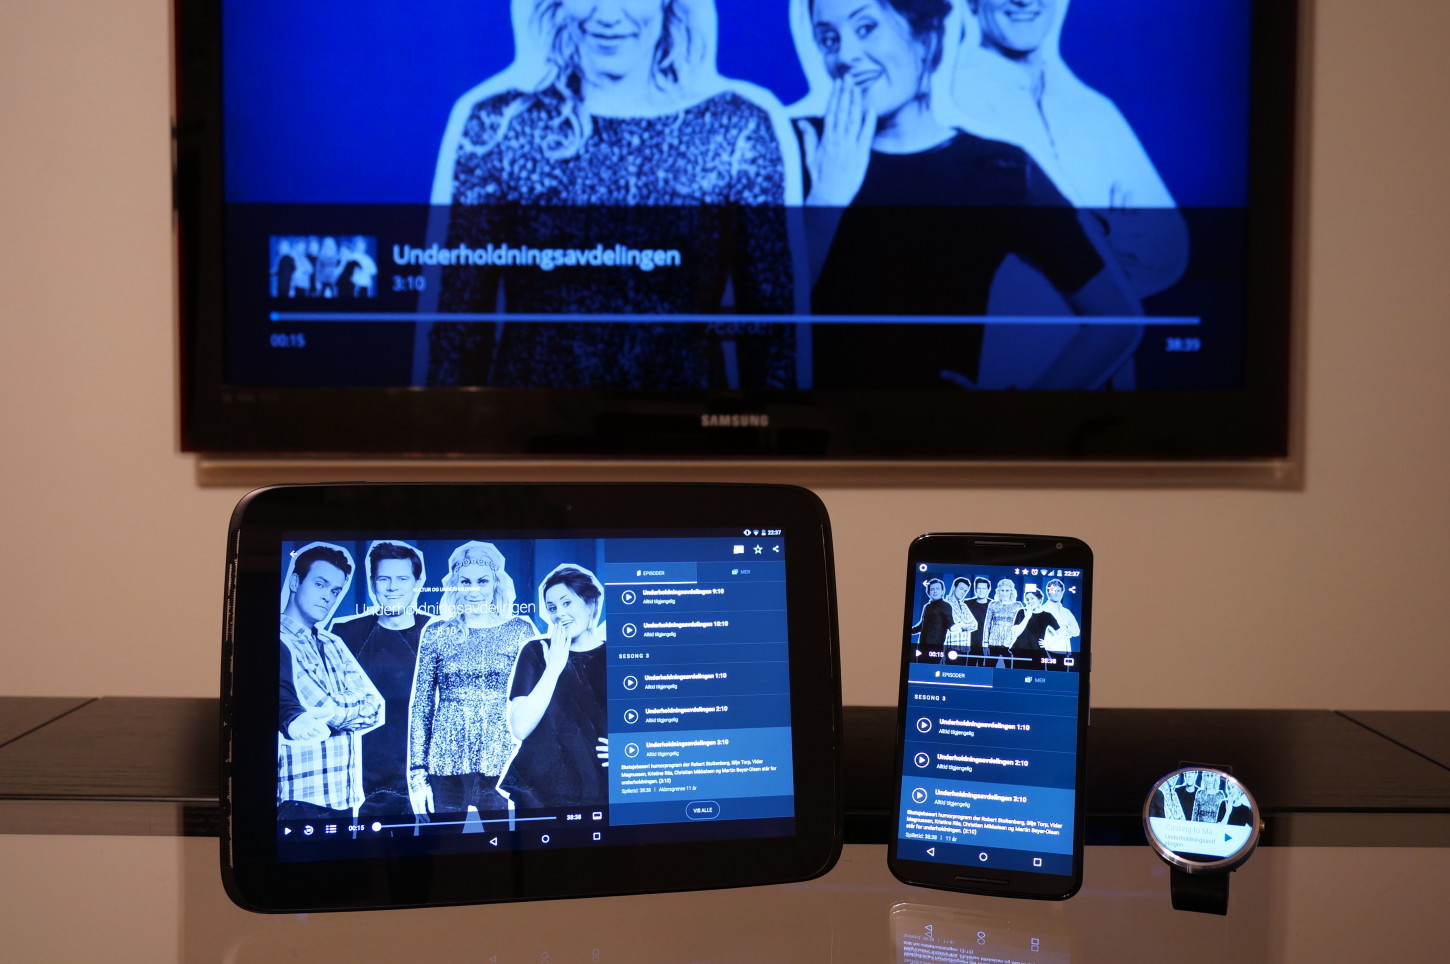 NRK TV for Android: Betaperioden er over